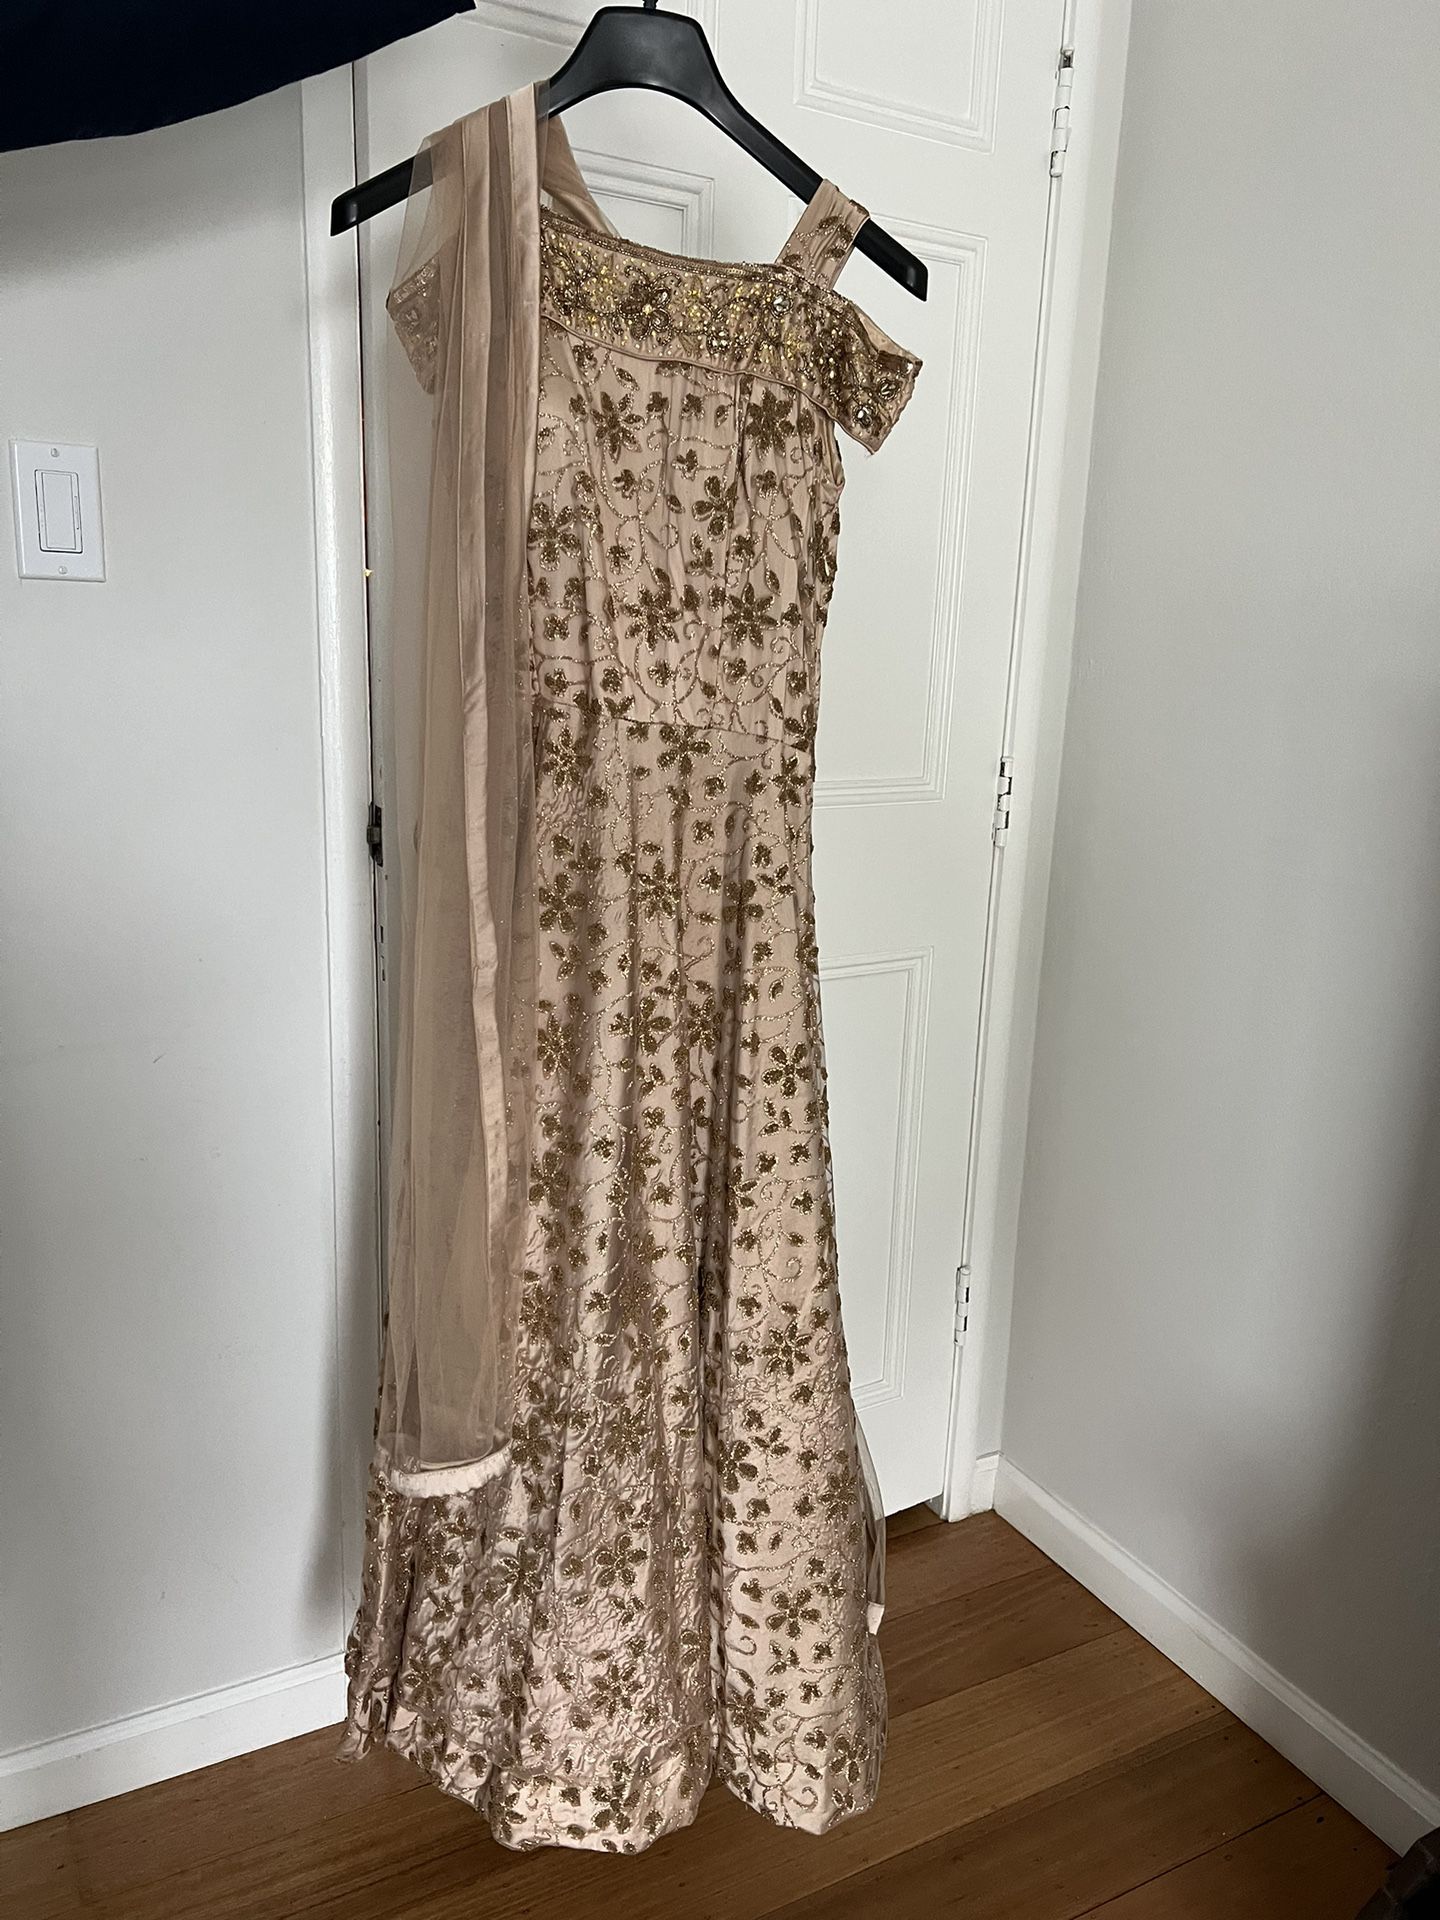 Beautiful Gold Dress/Gown